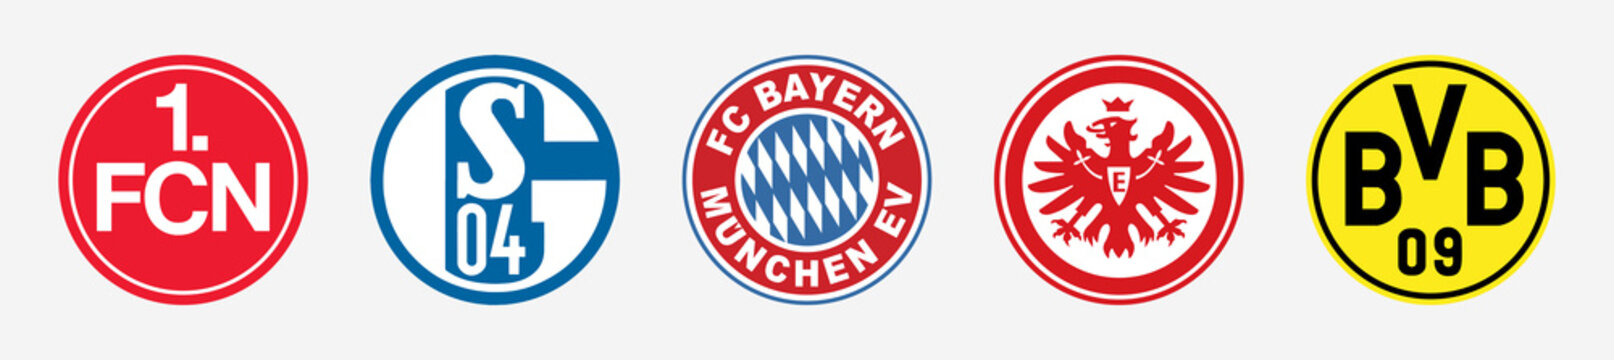 Popular Bundesliga football clubs logo. FC Bayern Munich, Borussia Dortmund, Schalke 04, FC Nurnberg, Eintracht Frankfurt, etc.  Editorial vector icon.
